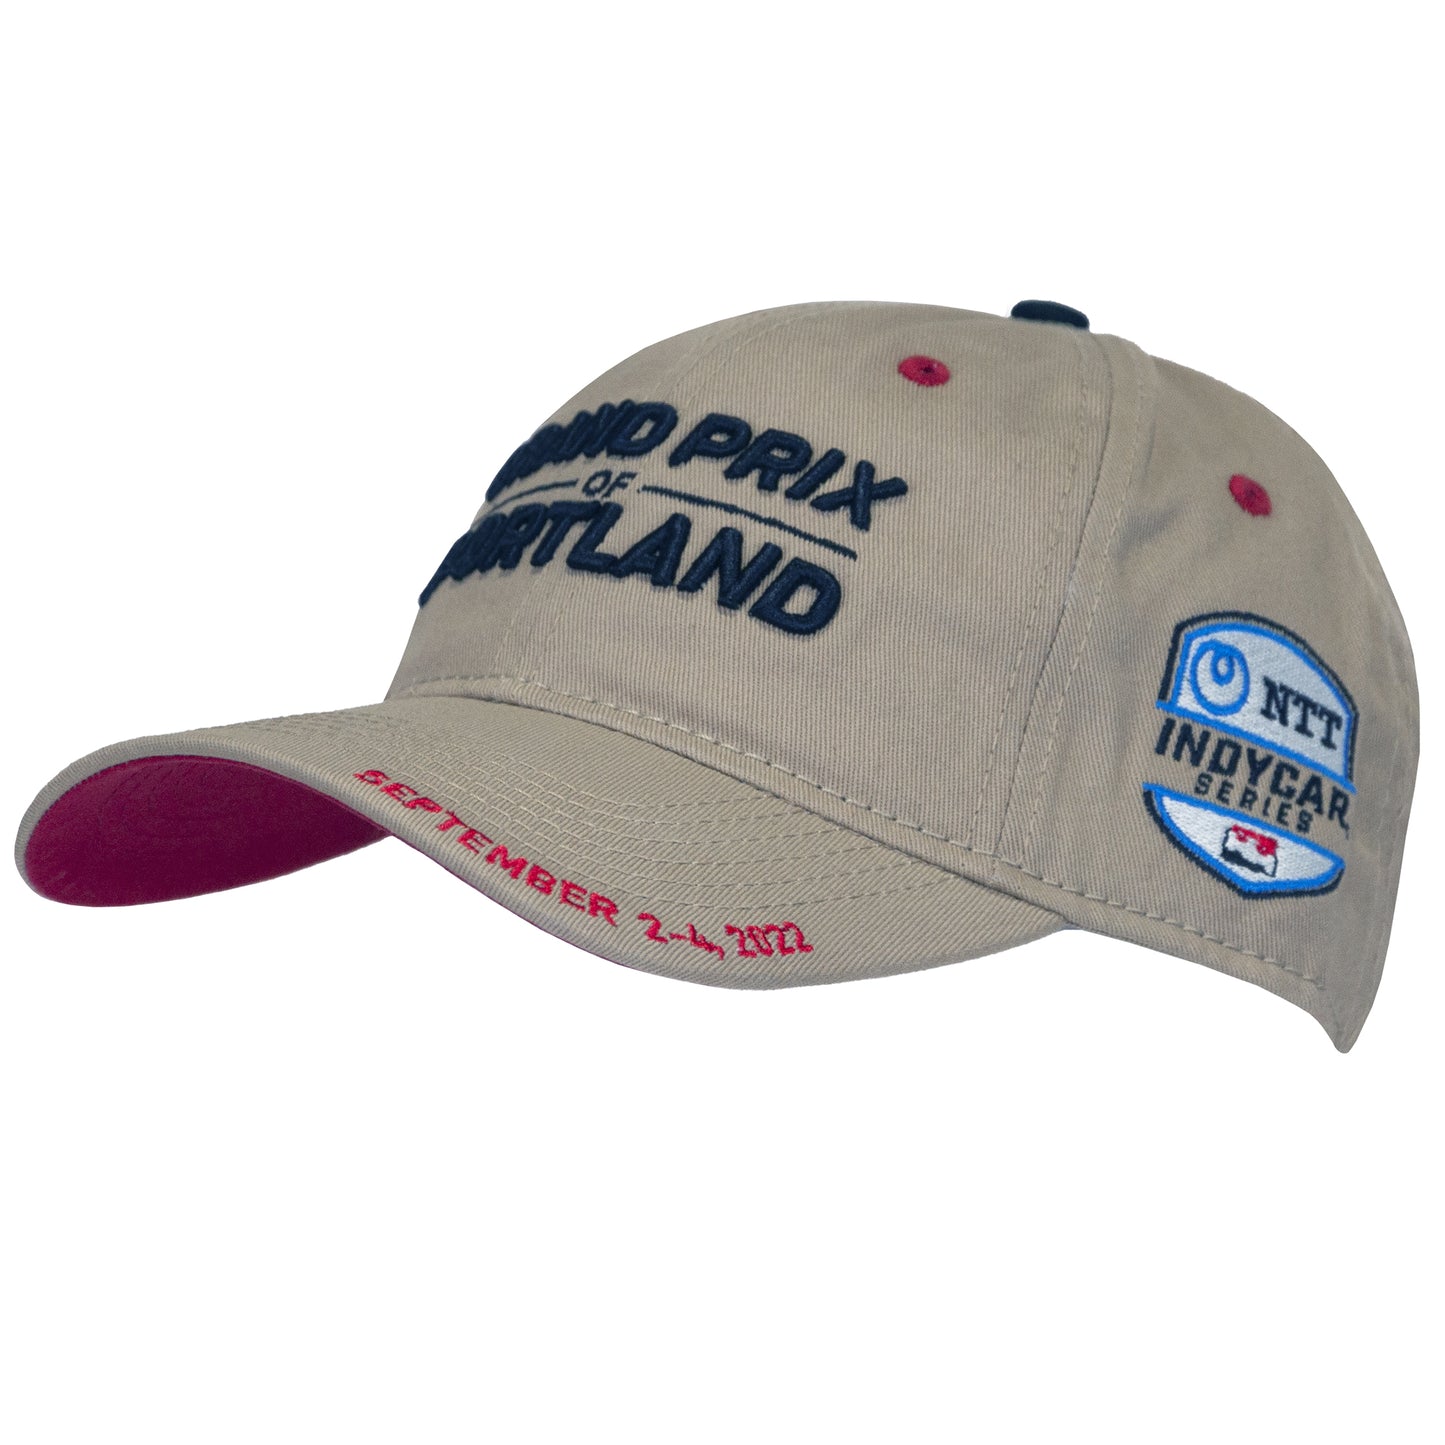 2022 GP Portland Event Dad Hat - Khaki